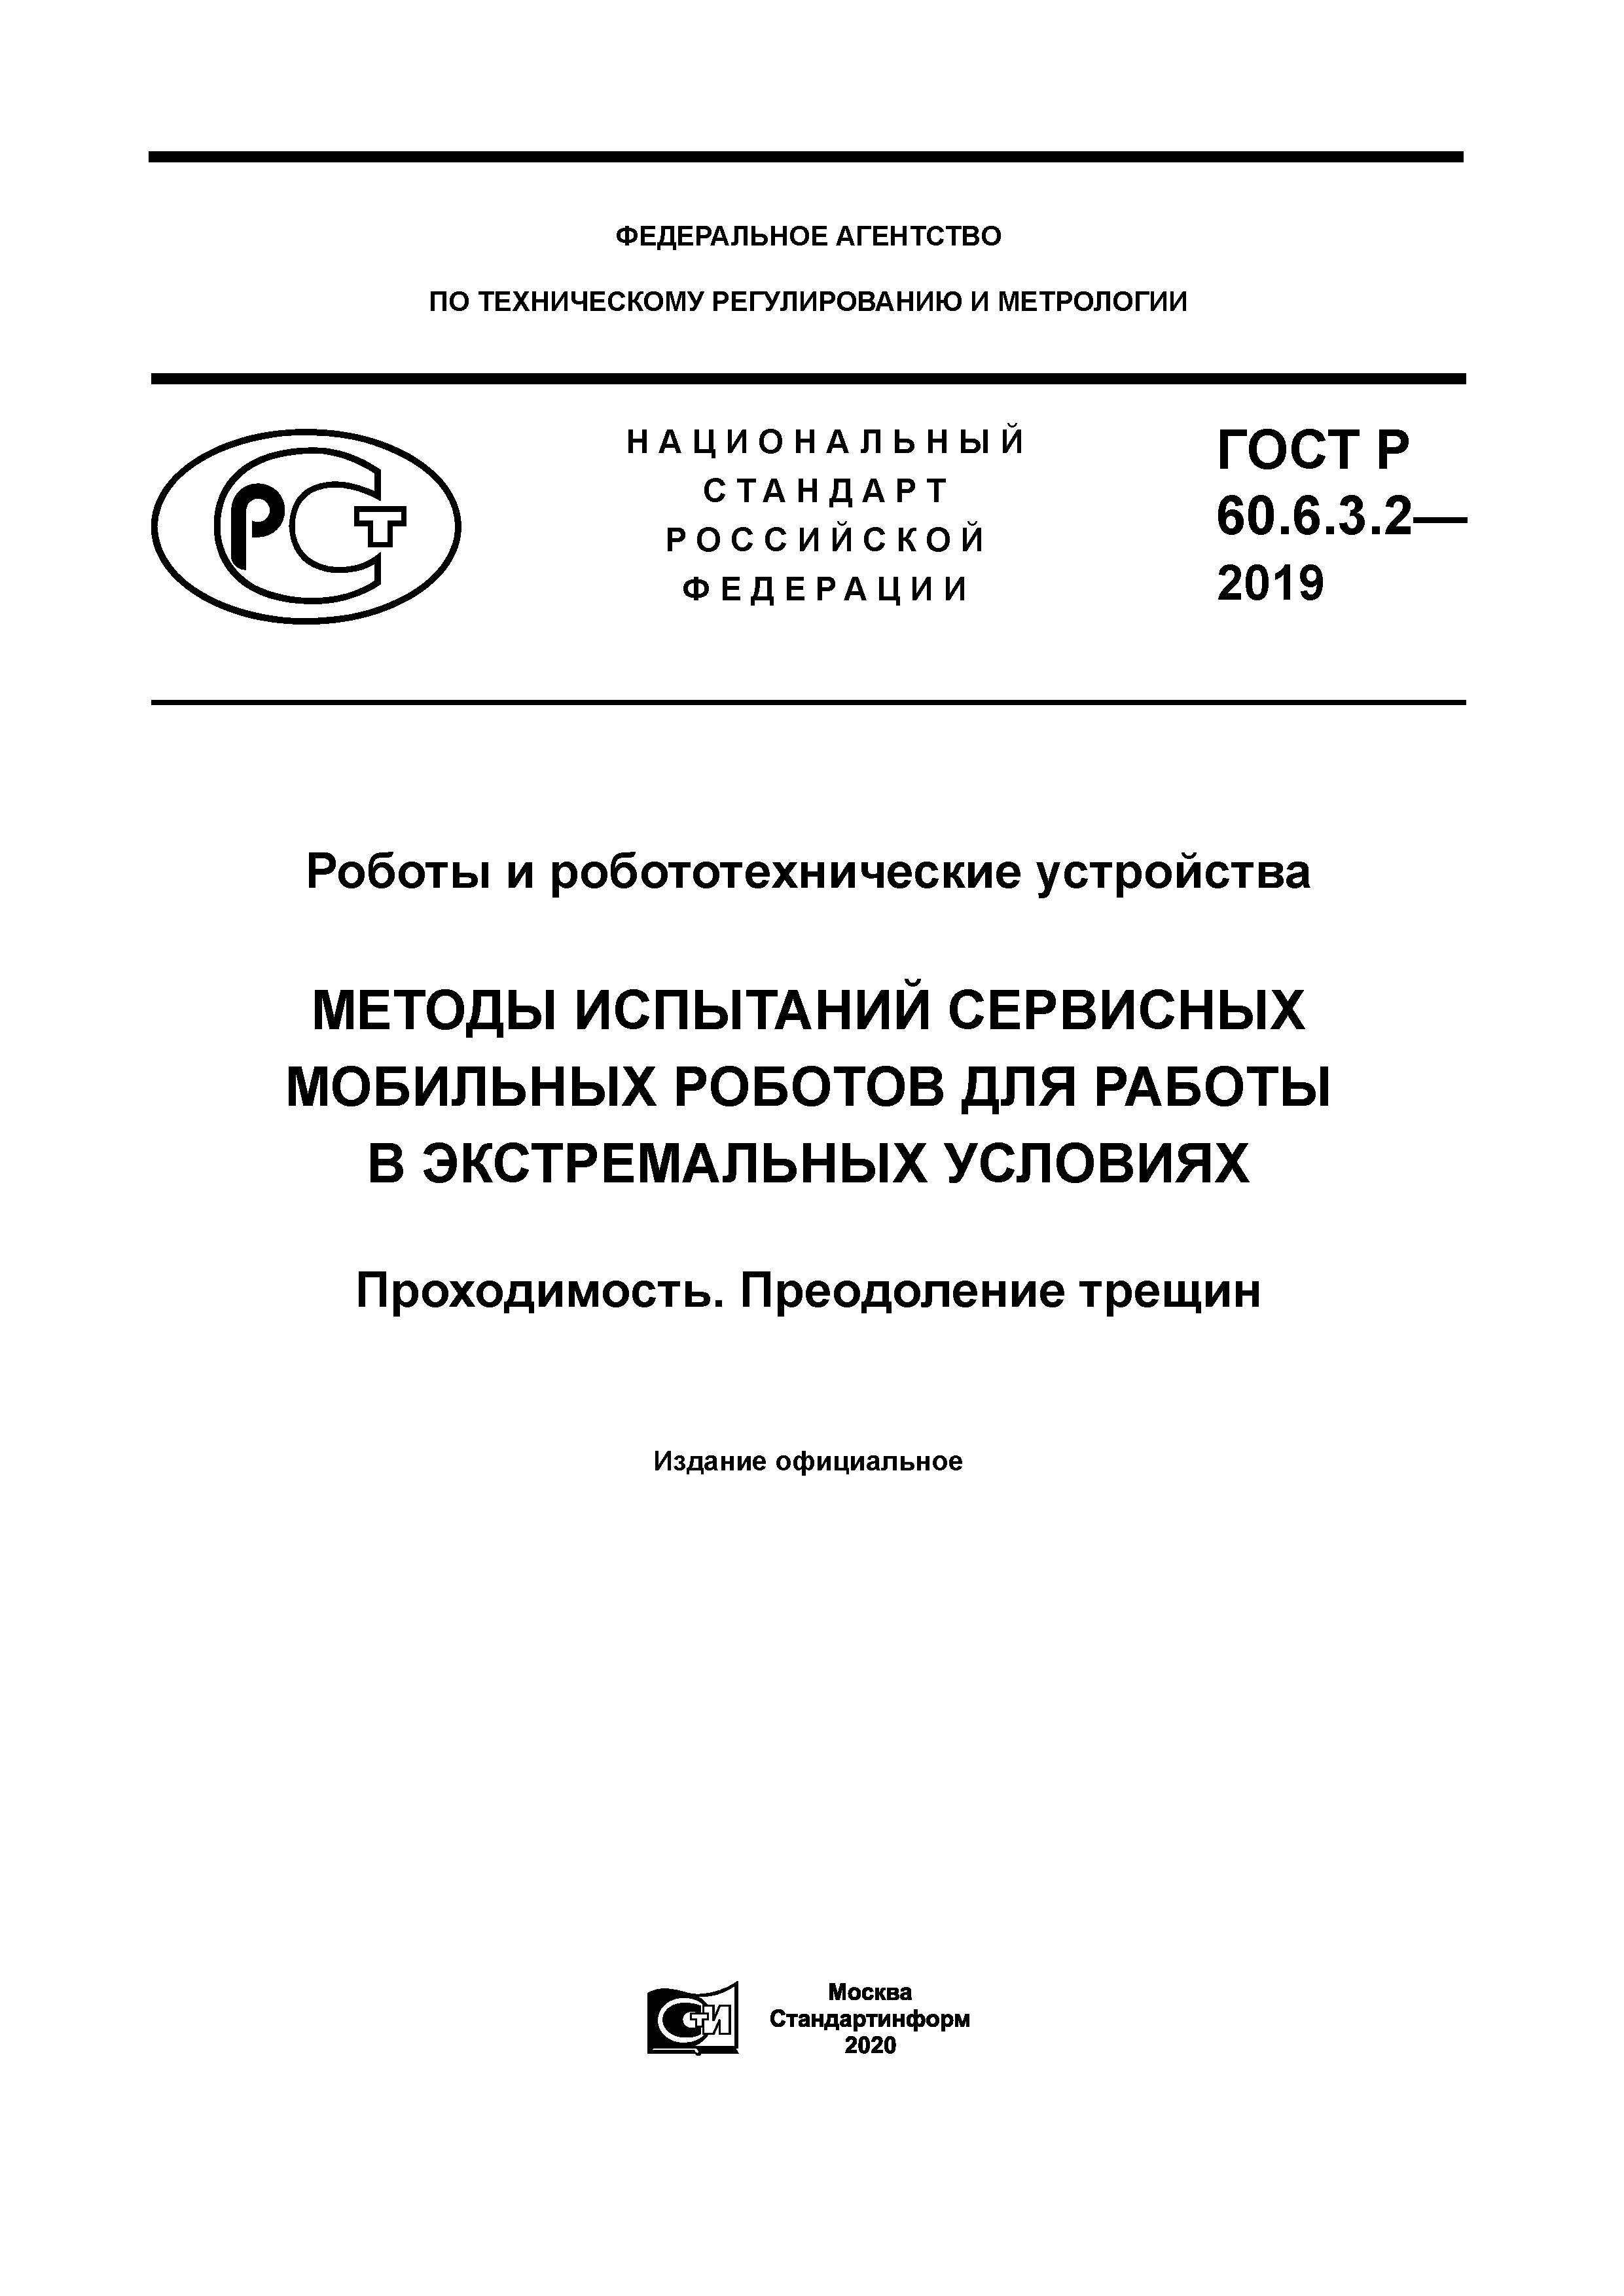 ГОСТ Р 60.6.3.2-2019